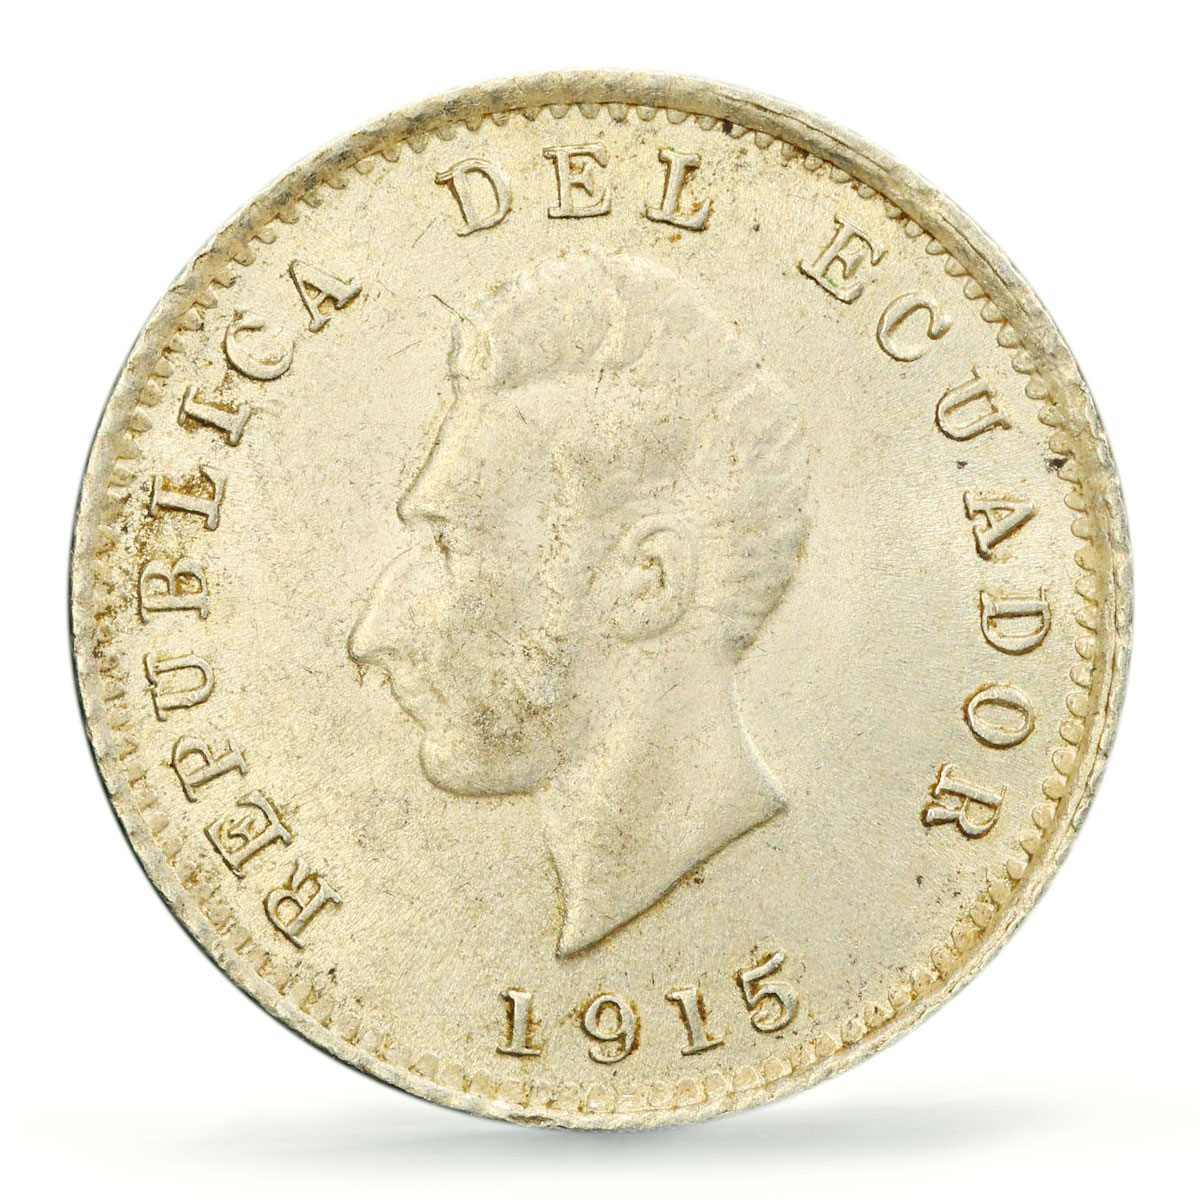 Ecuador 1/2 decimo Regular Coinage Antonio Sucre Birm MS62 PCGS silver coin 1915